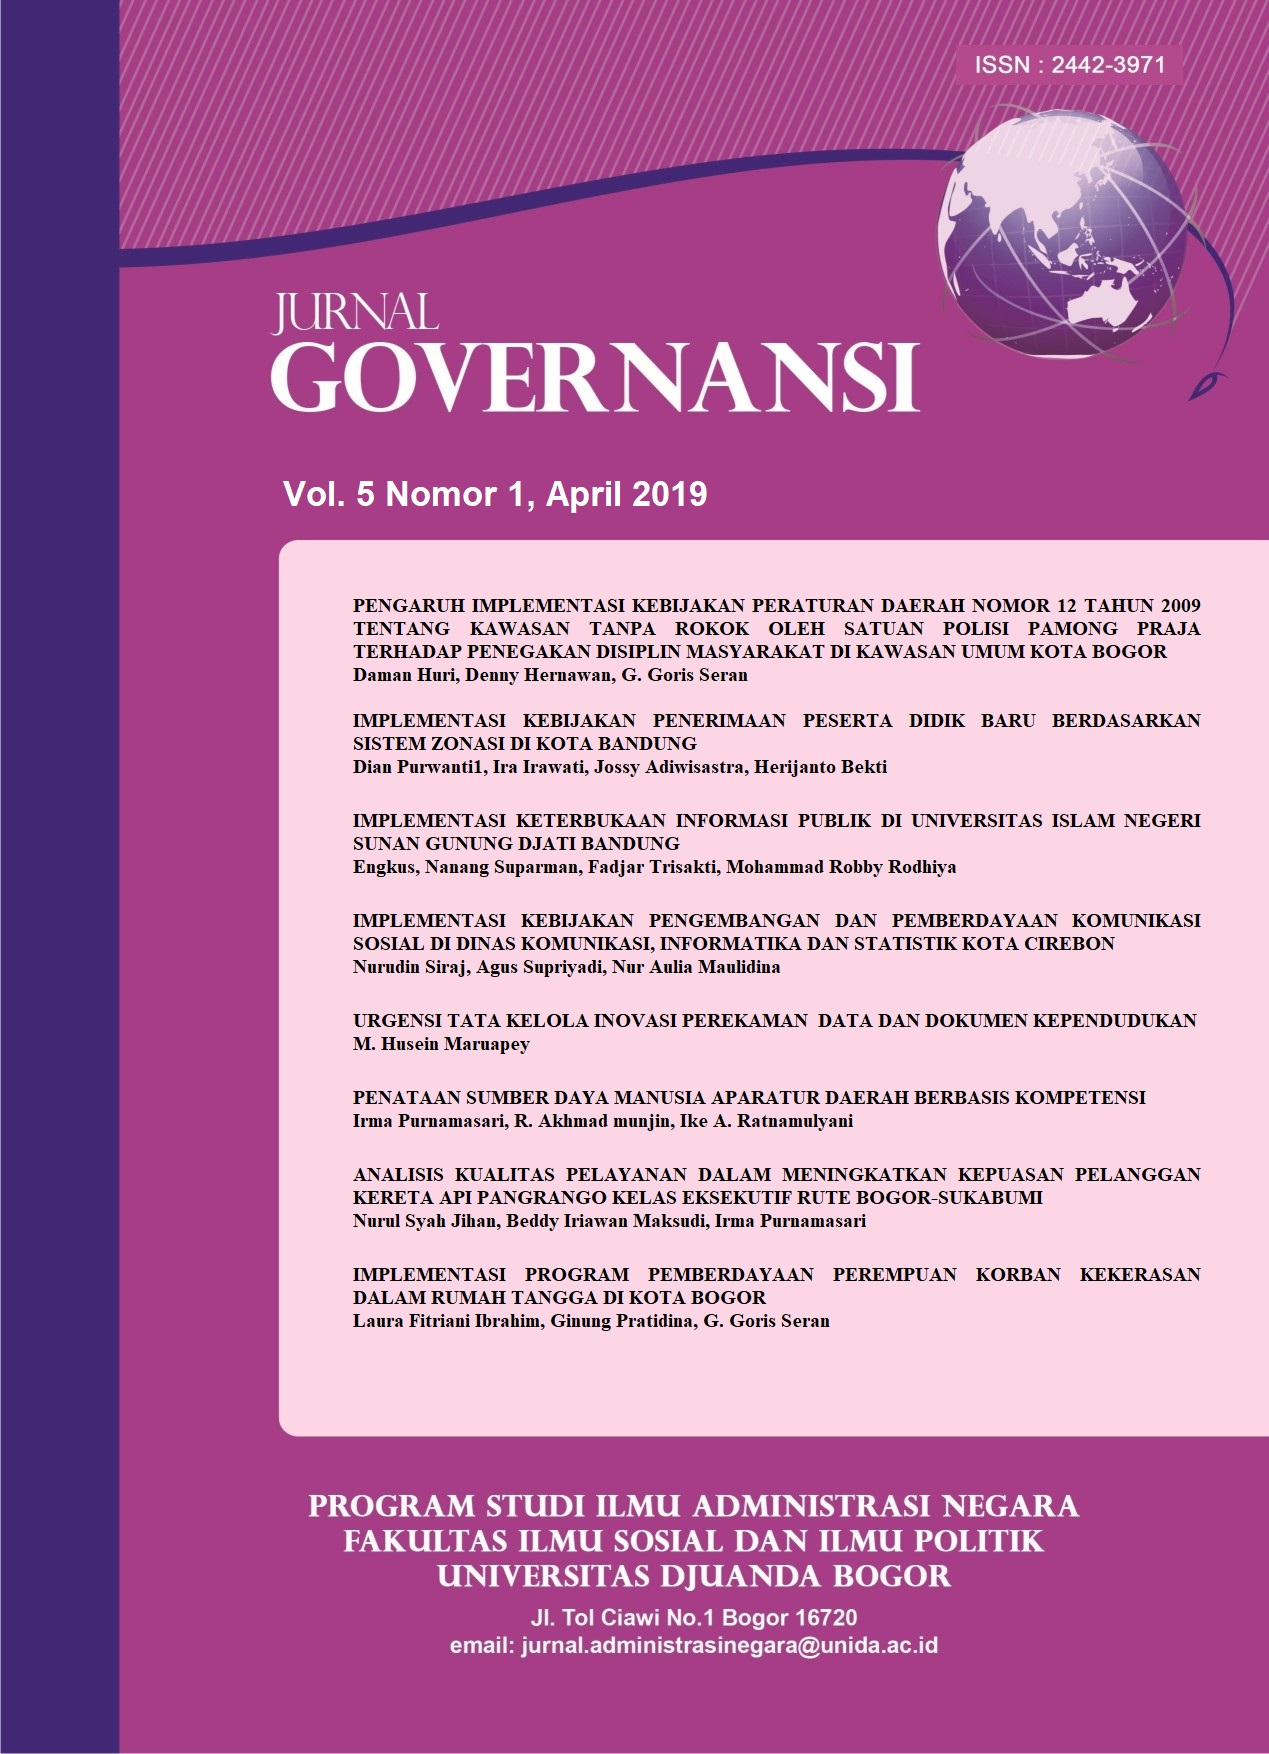 					Lihat Vol 5 No 1 (2019): Jurnal Governansi Vol. 5 No. 1 April 2019
				